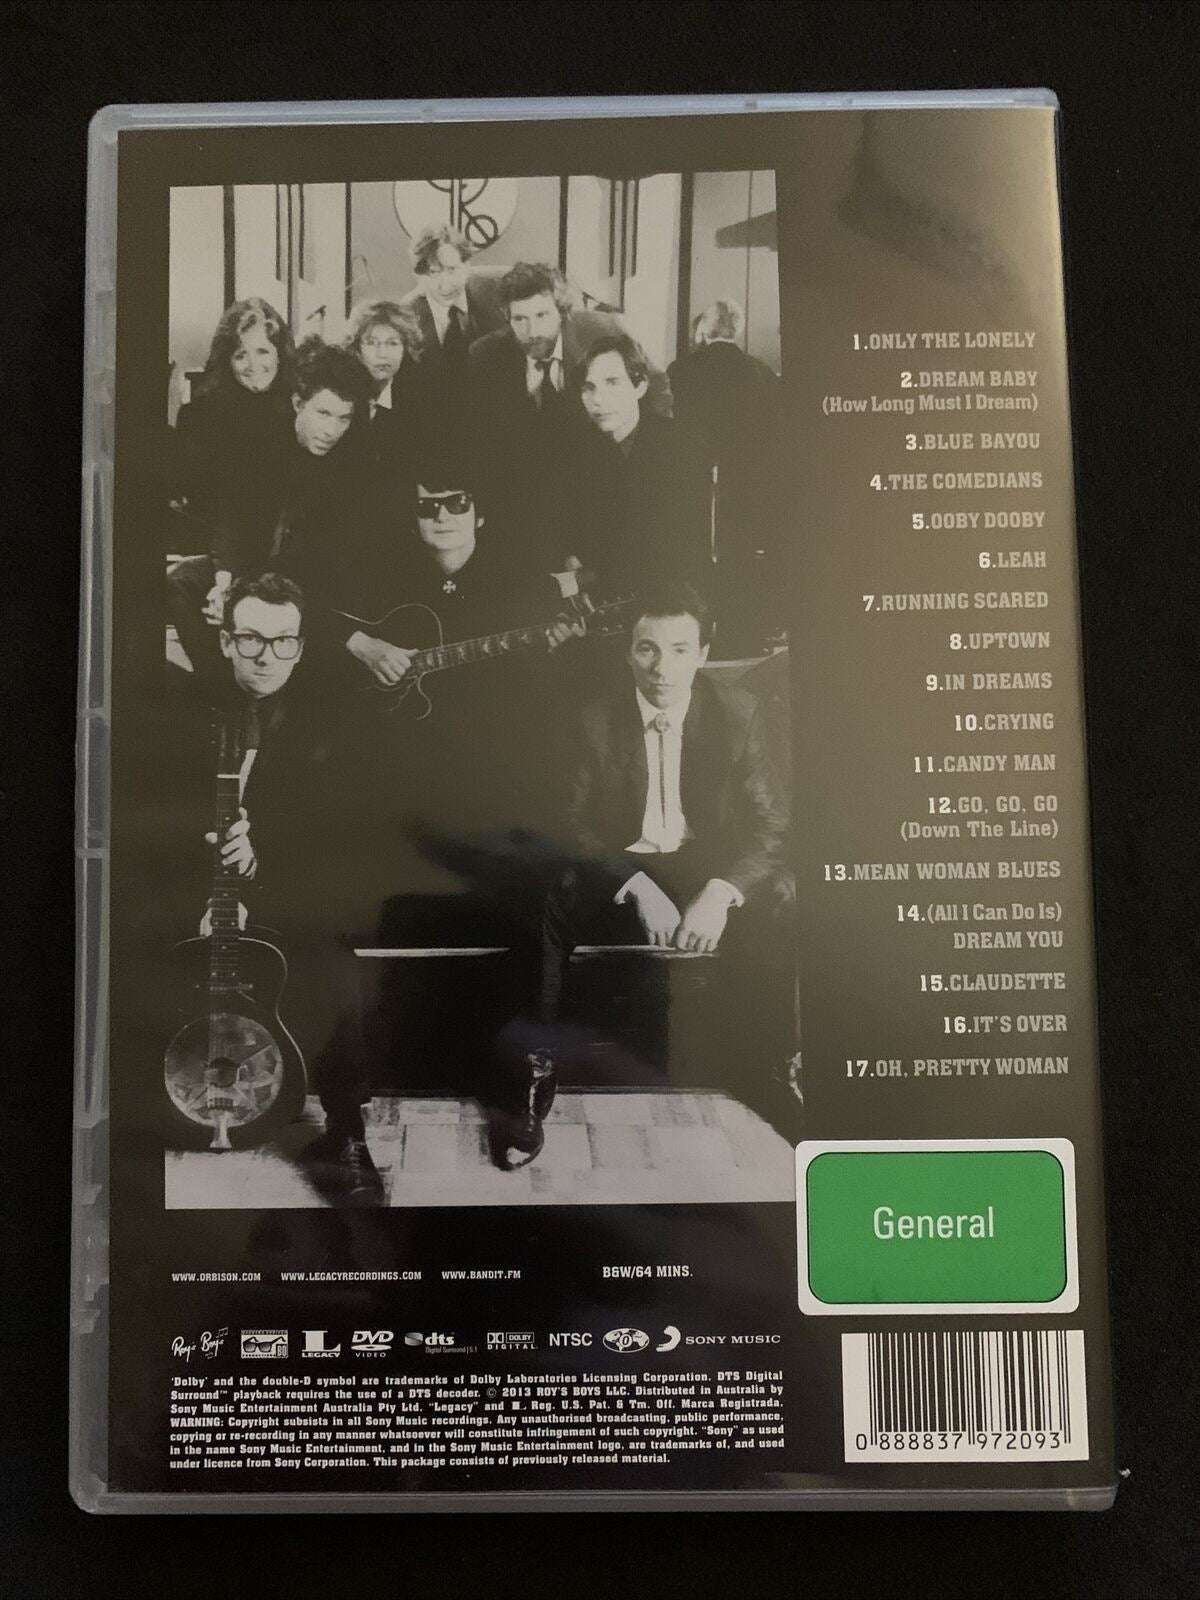 Roy Orbison: Black & White Night (DVD )All Region